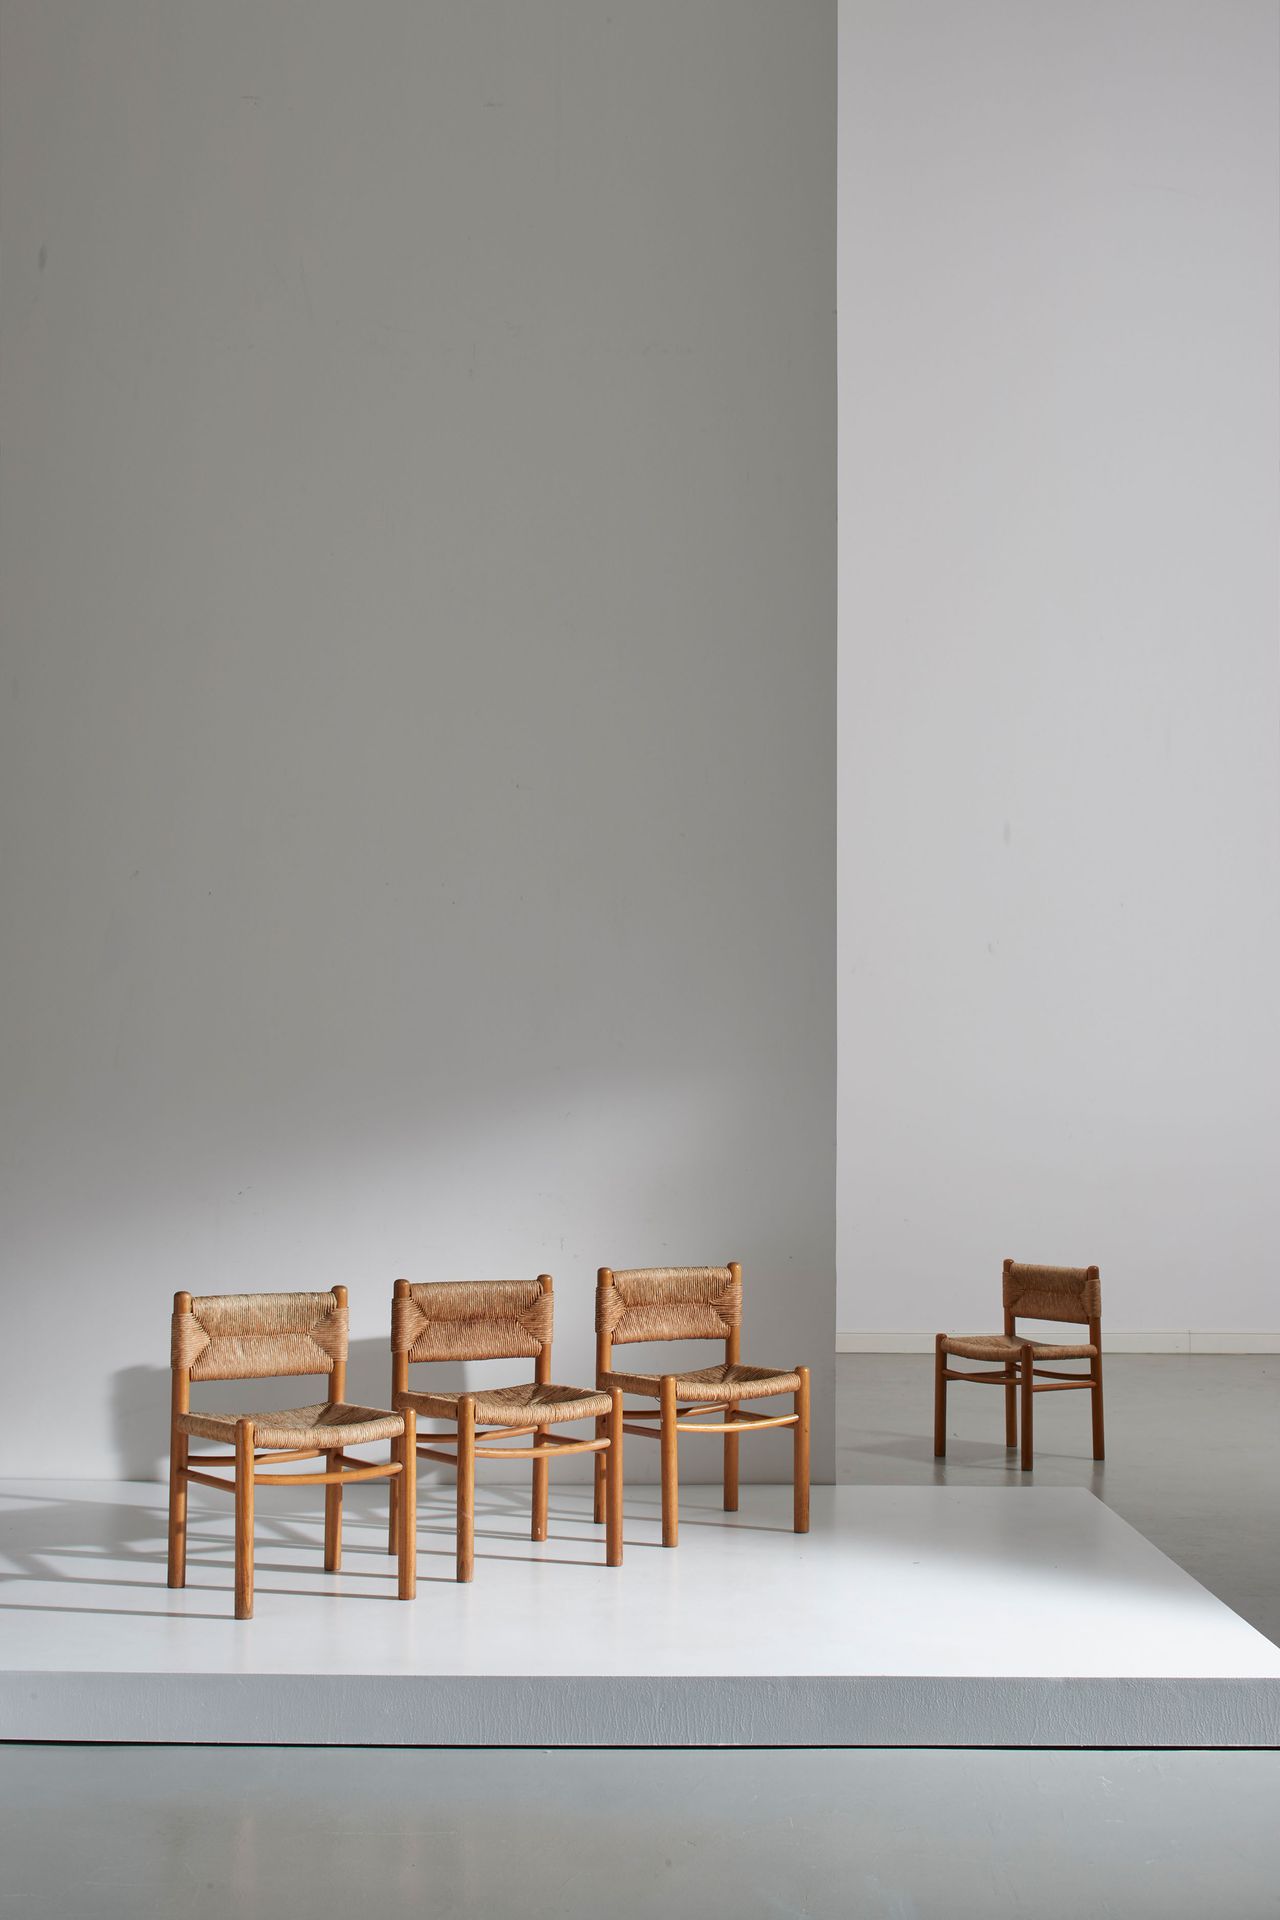 CHARLOTTE PERRIAND (ATTRIB. A) 四张椅子。针叶树木材，编织的河草。法国 1950年代。
cm 74x47x43
四把椅子属于C.P&hellip;